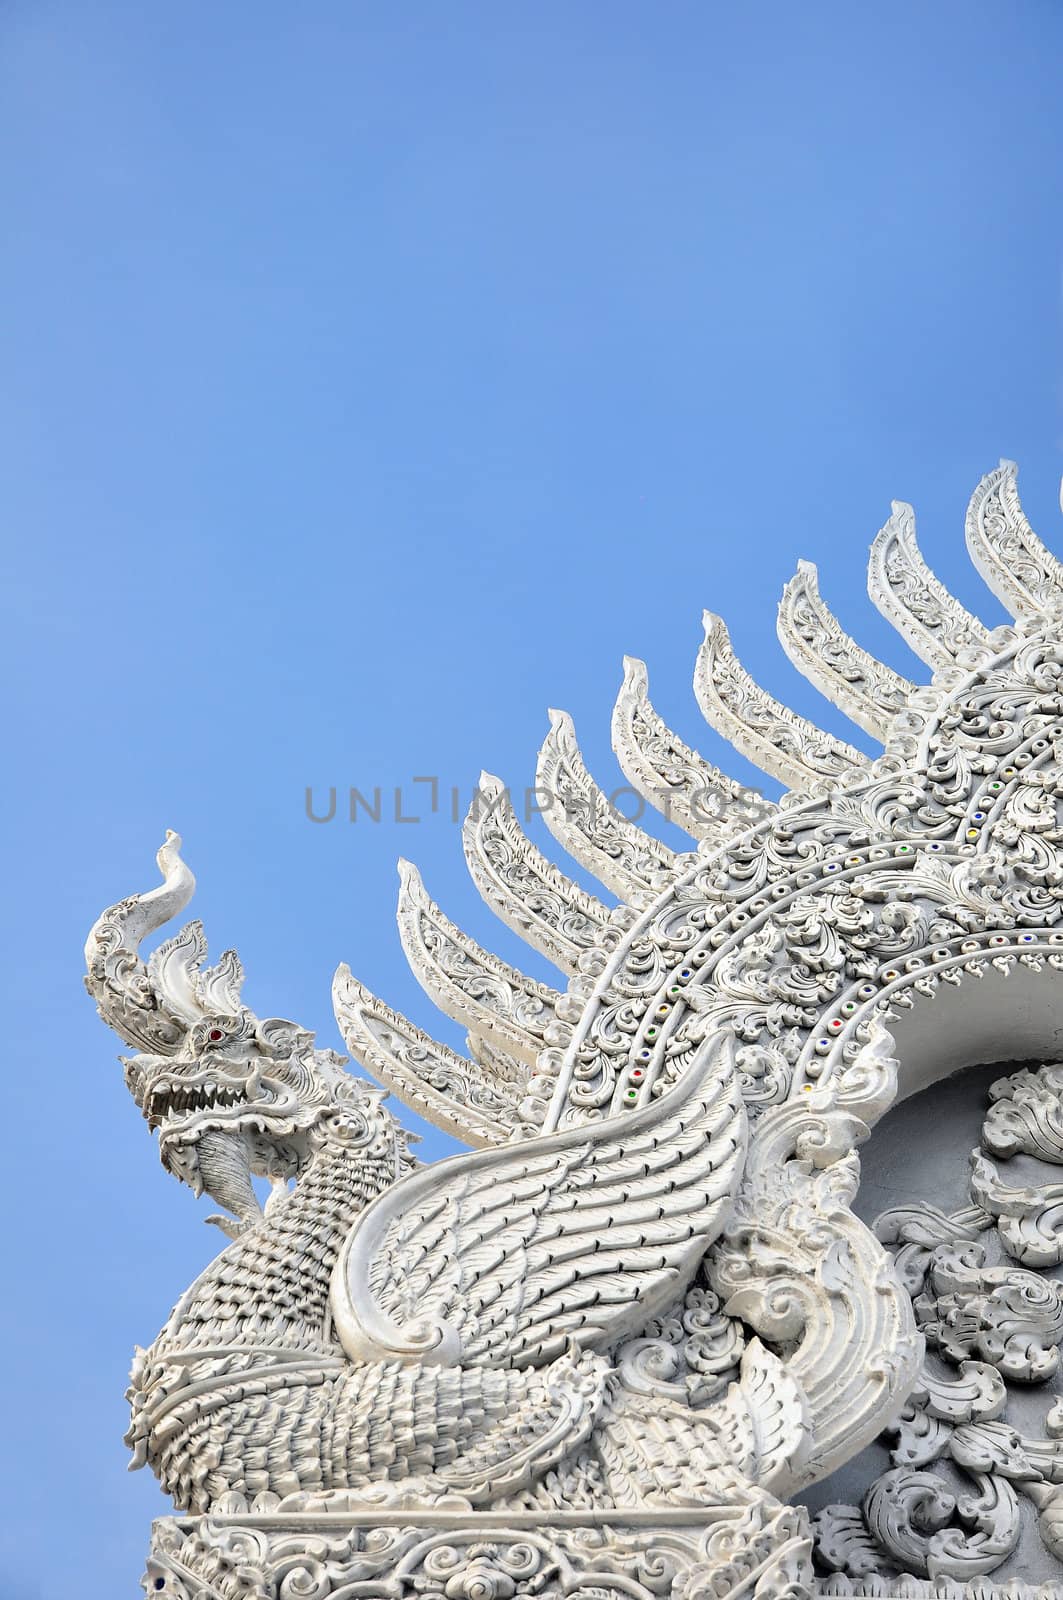 Creature statue on city pillar shrine of Nan district Thailand